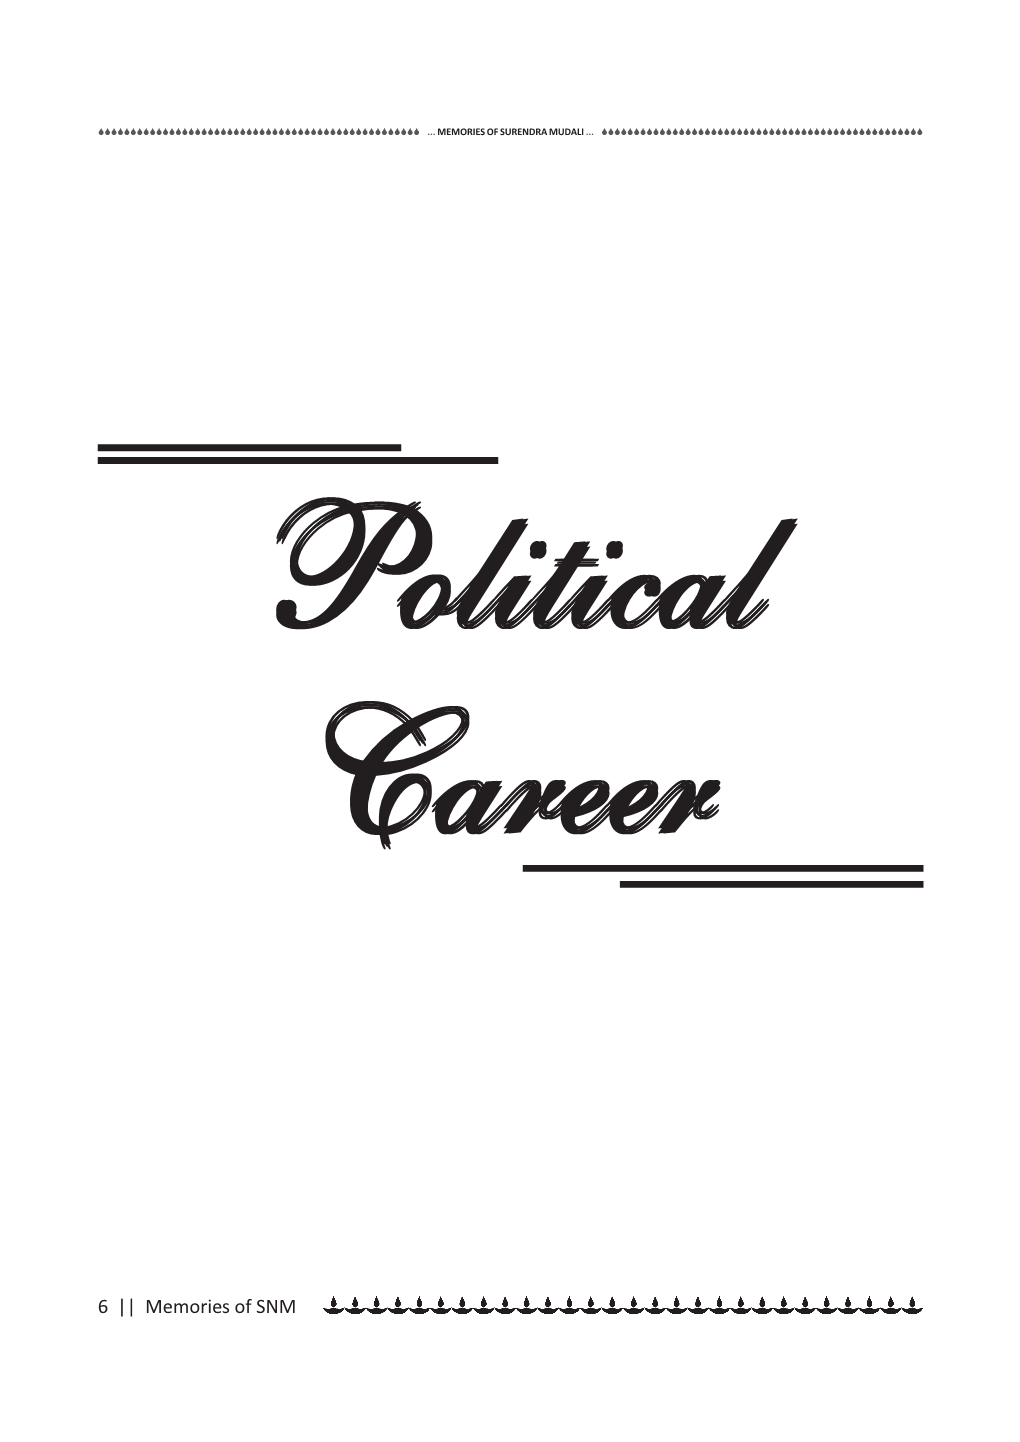 Political Careercareercareer